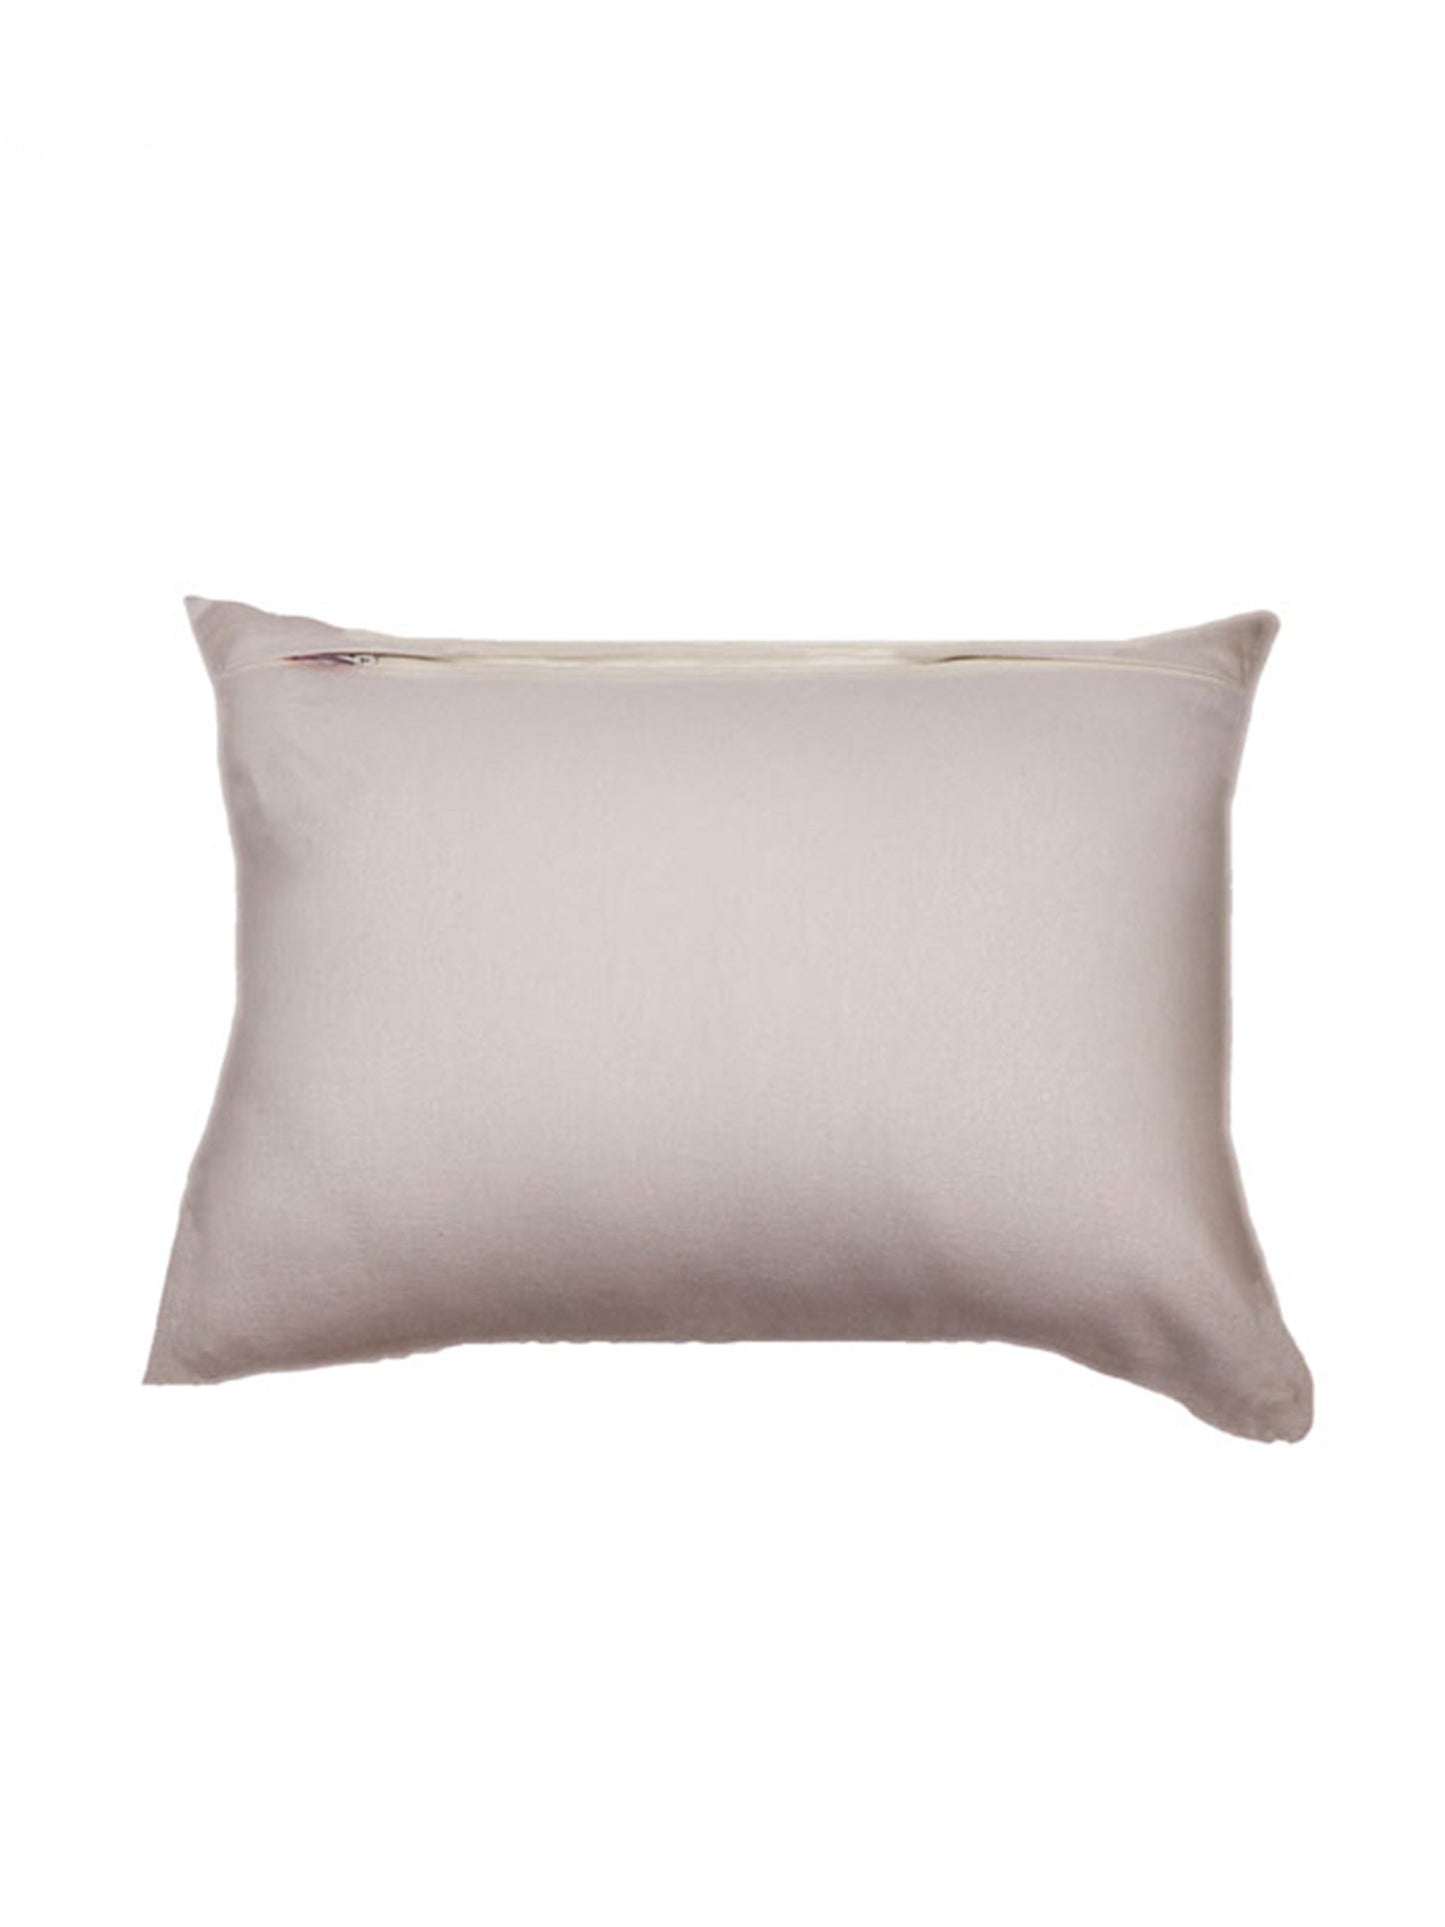 Technique Cushion Cover Cotton Blend Pintuck White Beige - 14" X 19"